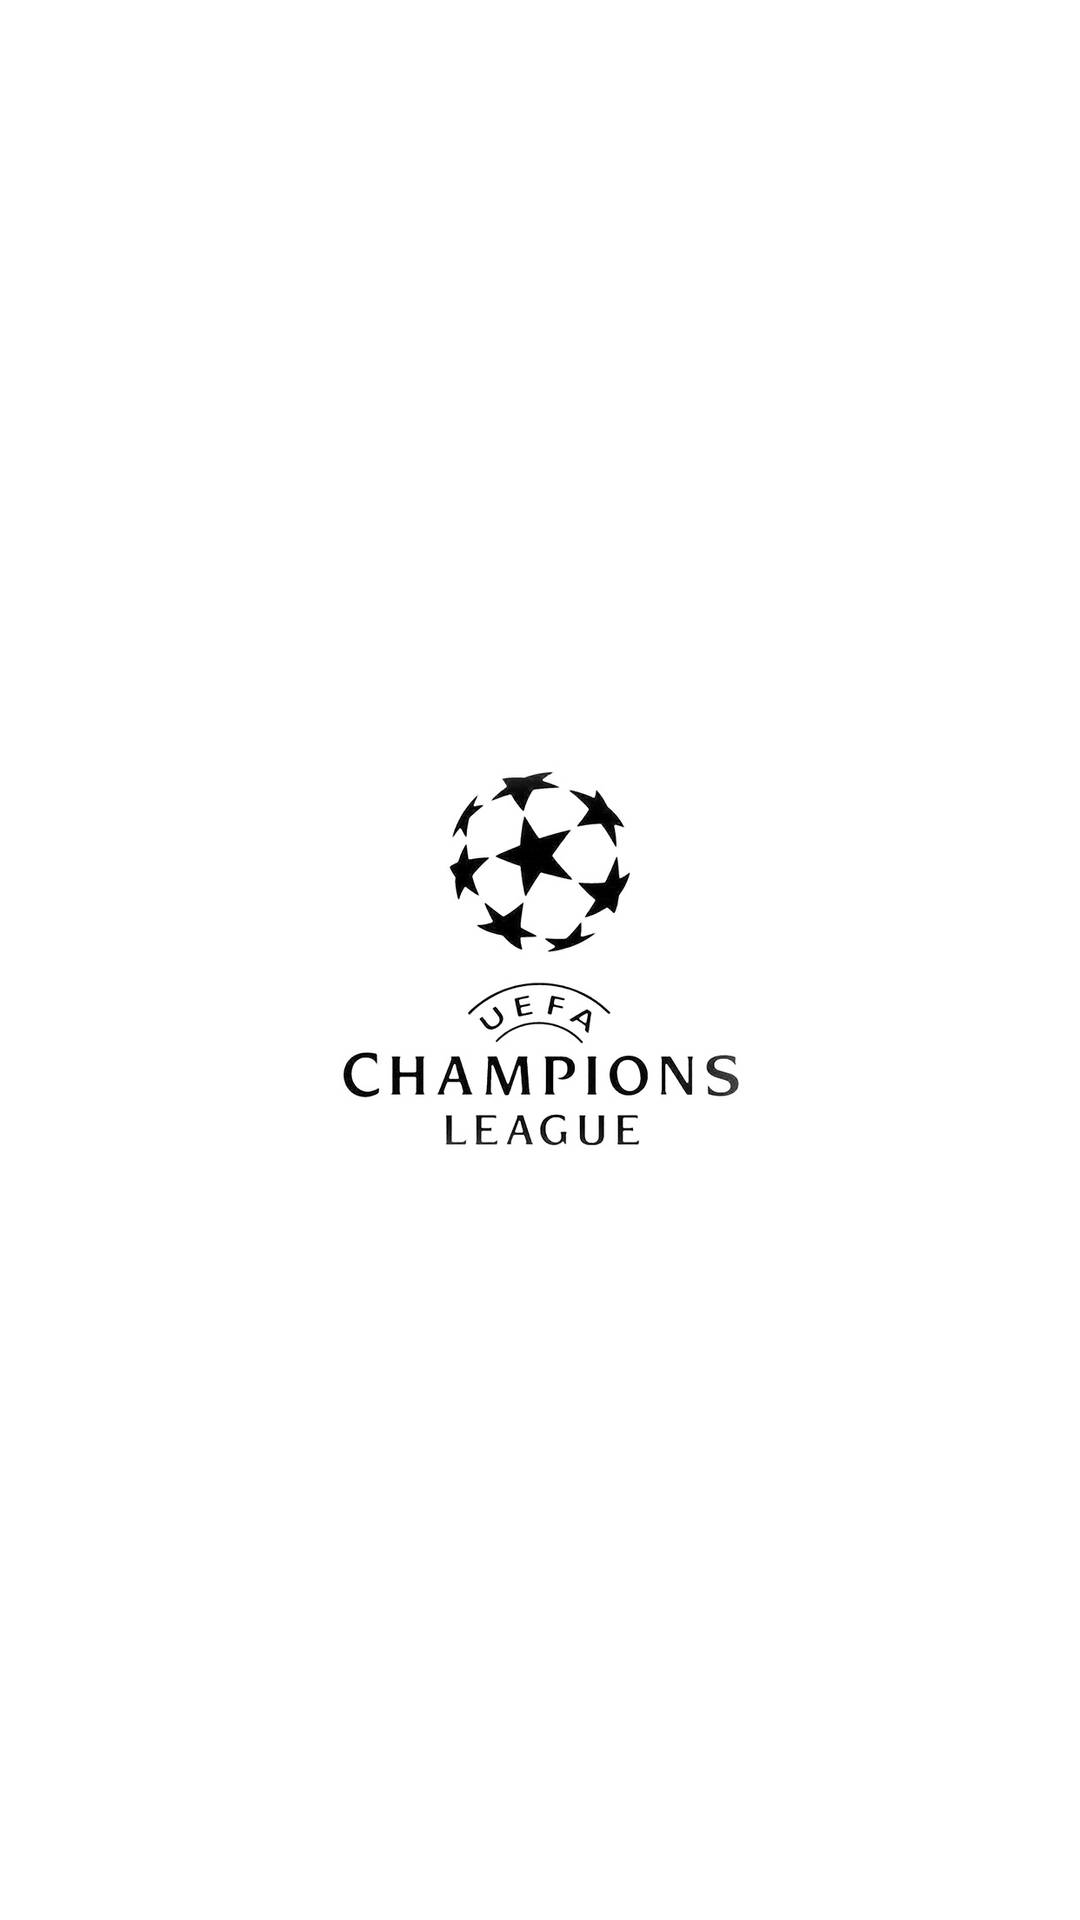 Simple Uefa Champions League Logo